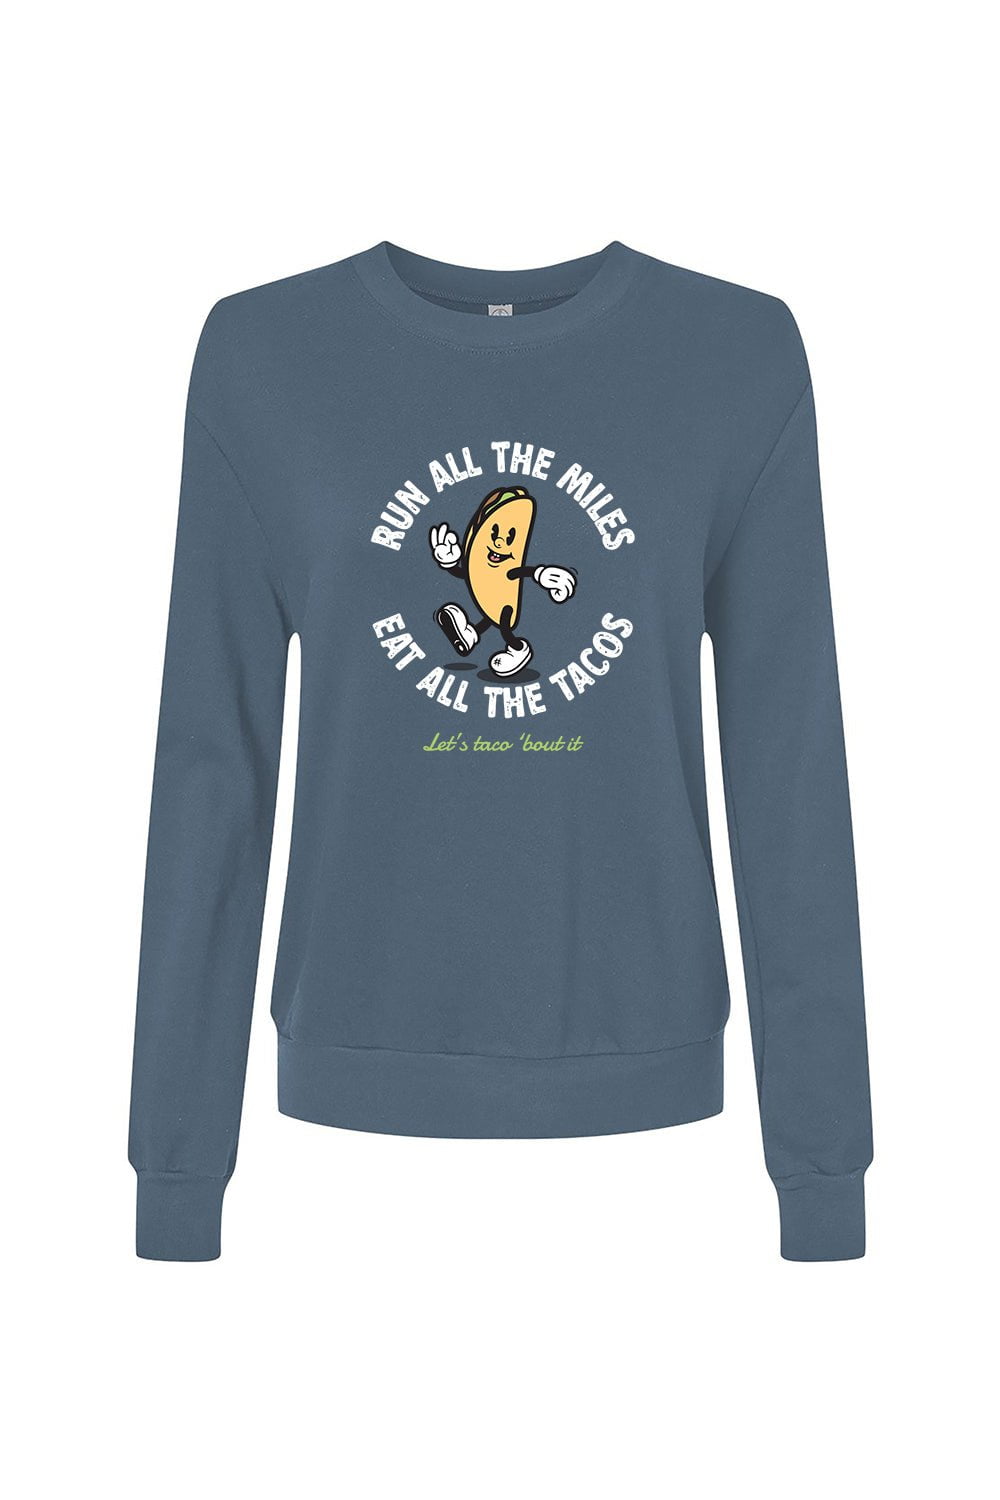 Sarah Marie Design Studio Sweatshirt Run All The Miles, Eat All The Tacos Women's Sweatshirt